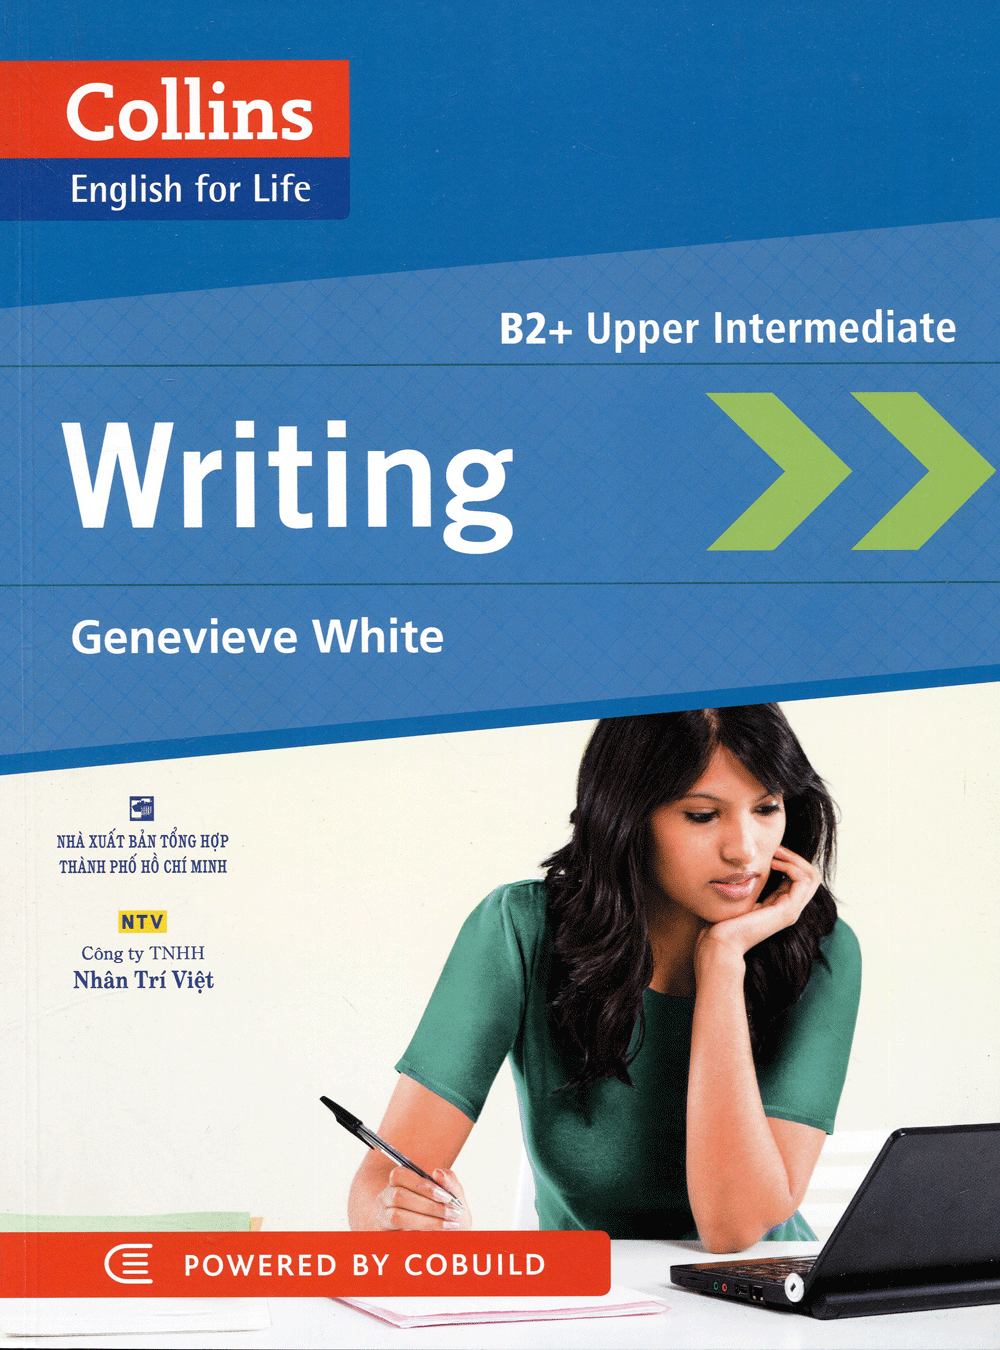 Collins English For Life - Writing B2+ Upper Intermediate